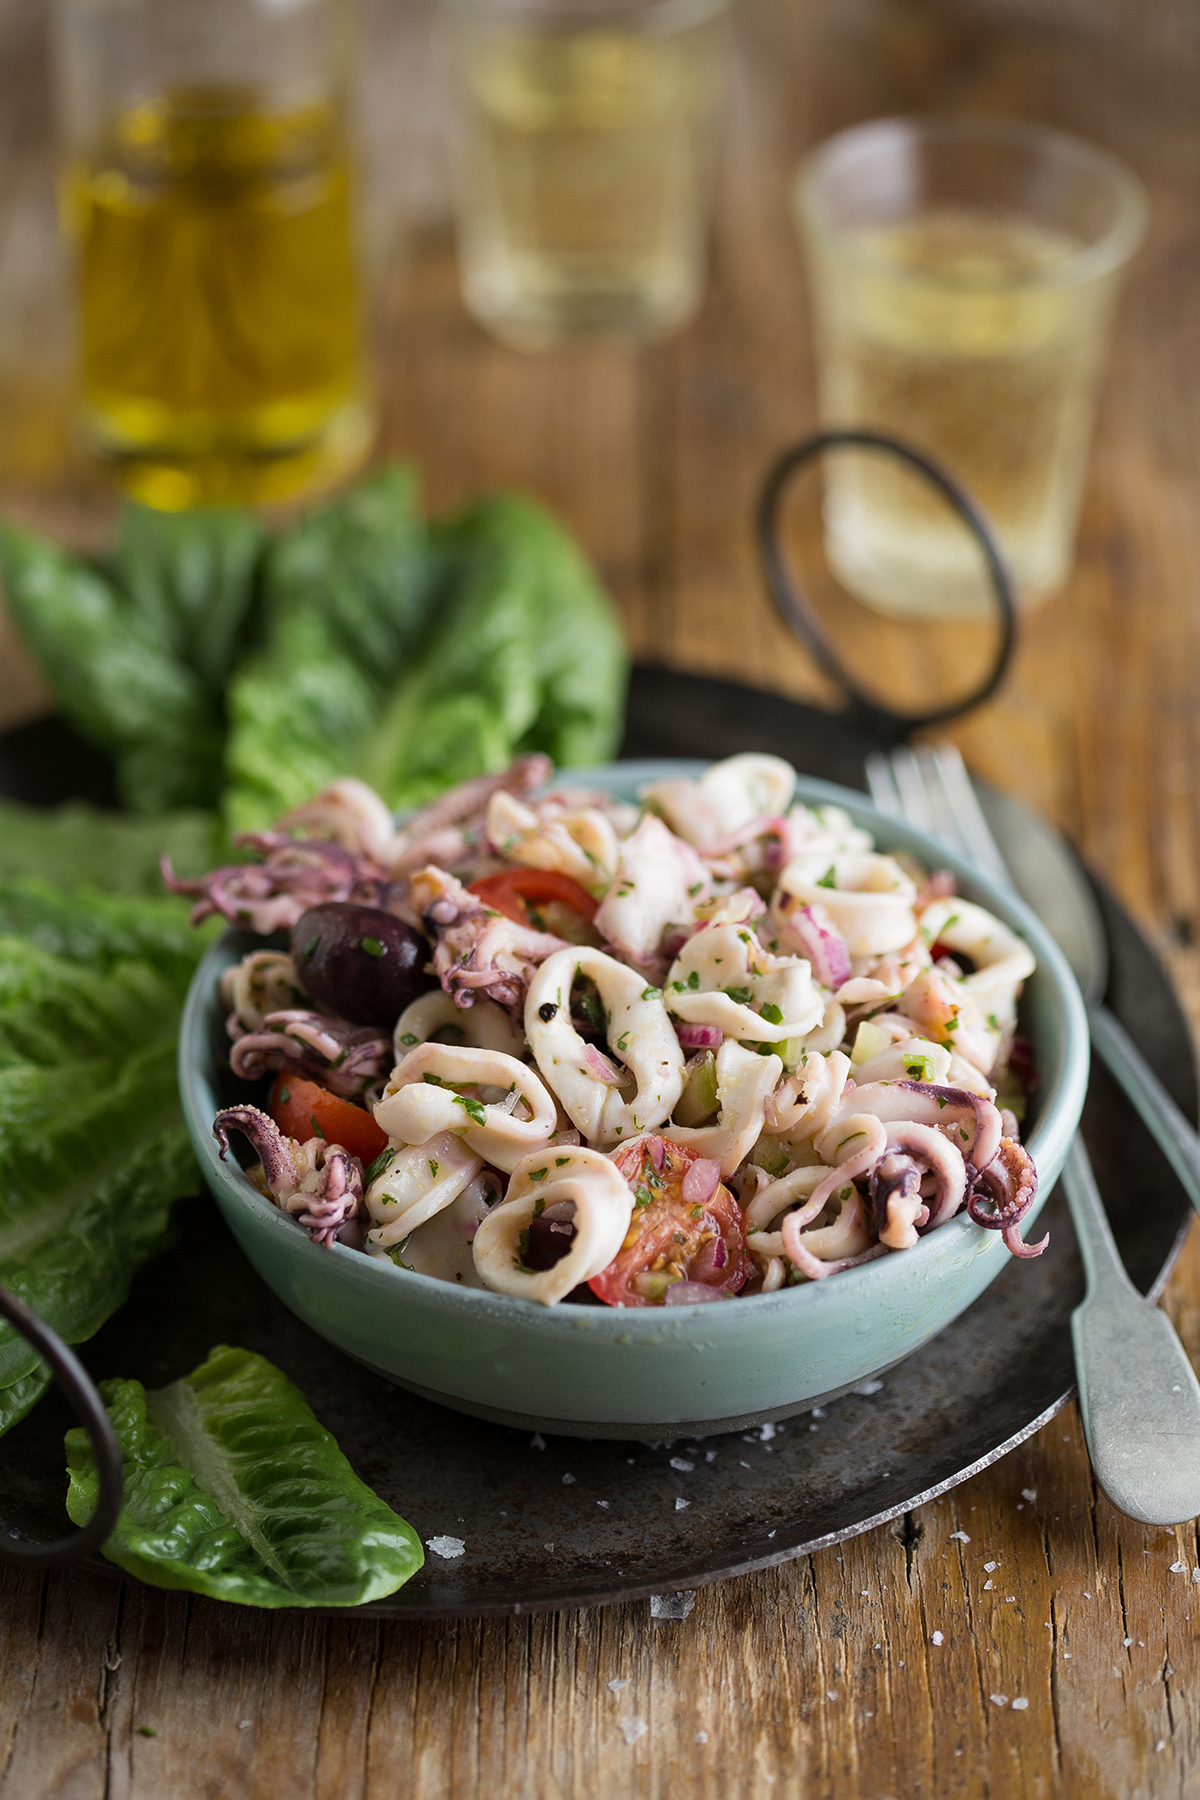 A delicious calamari salad with tomatoes, olives & lemon